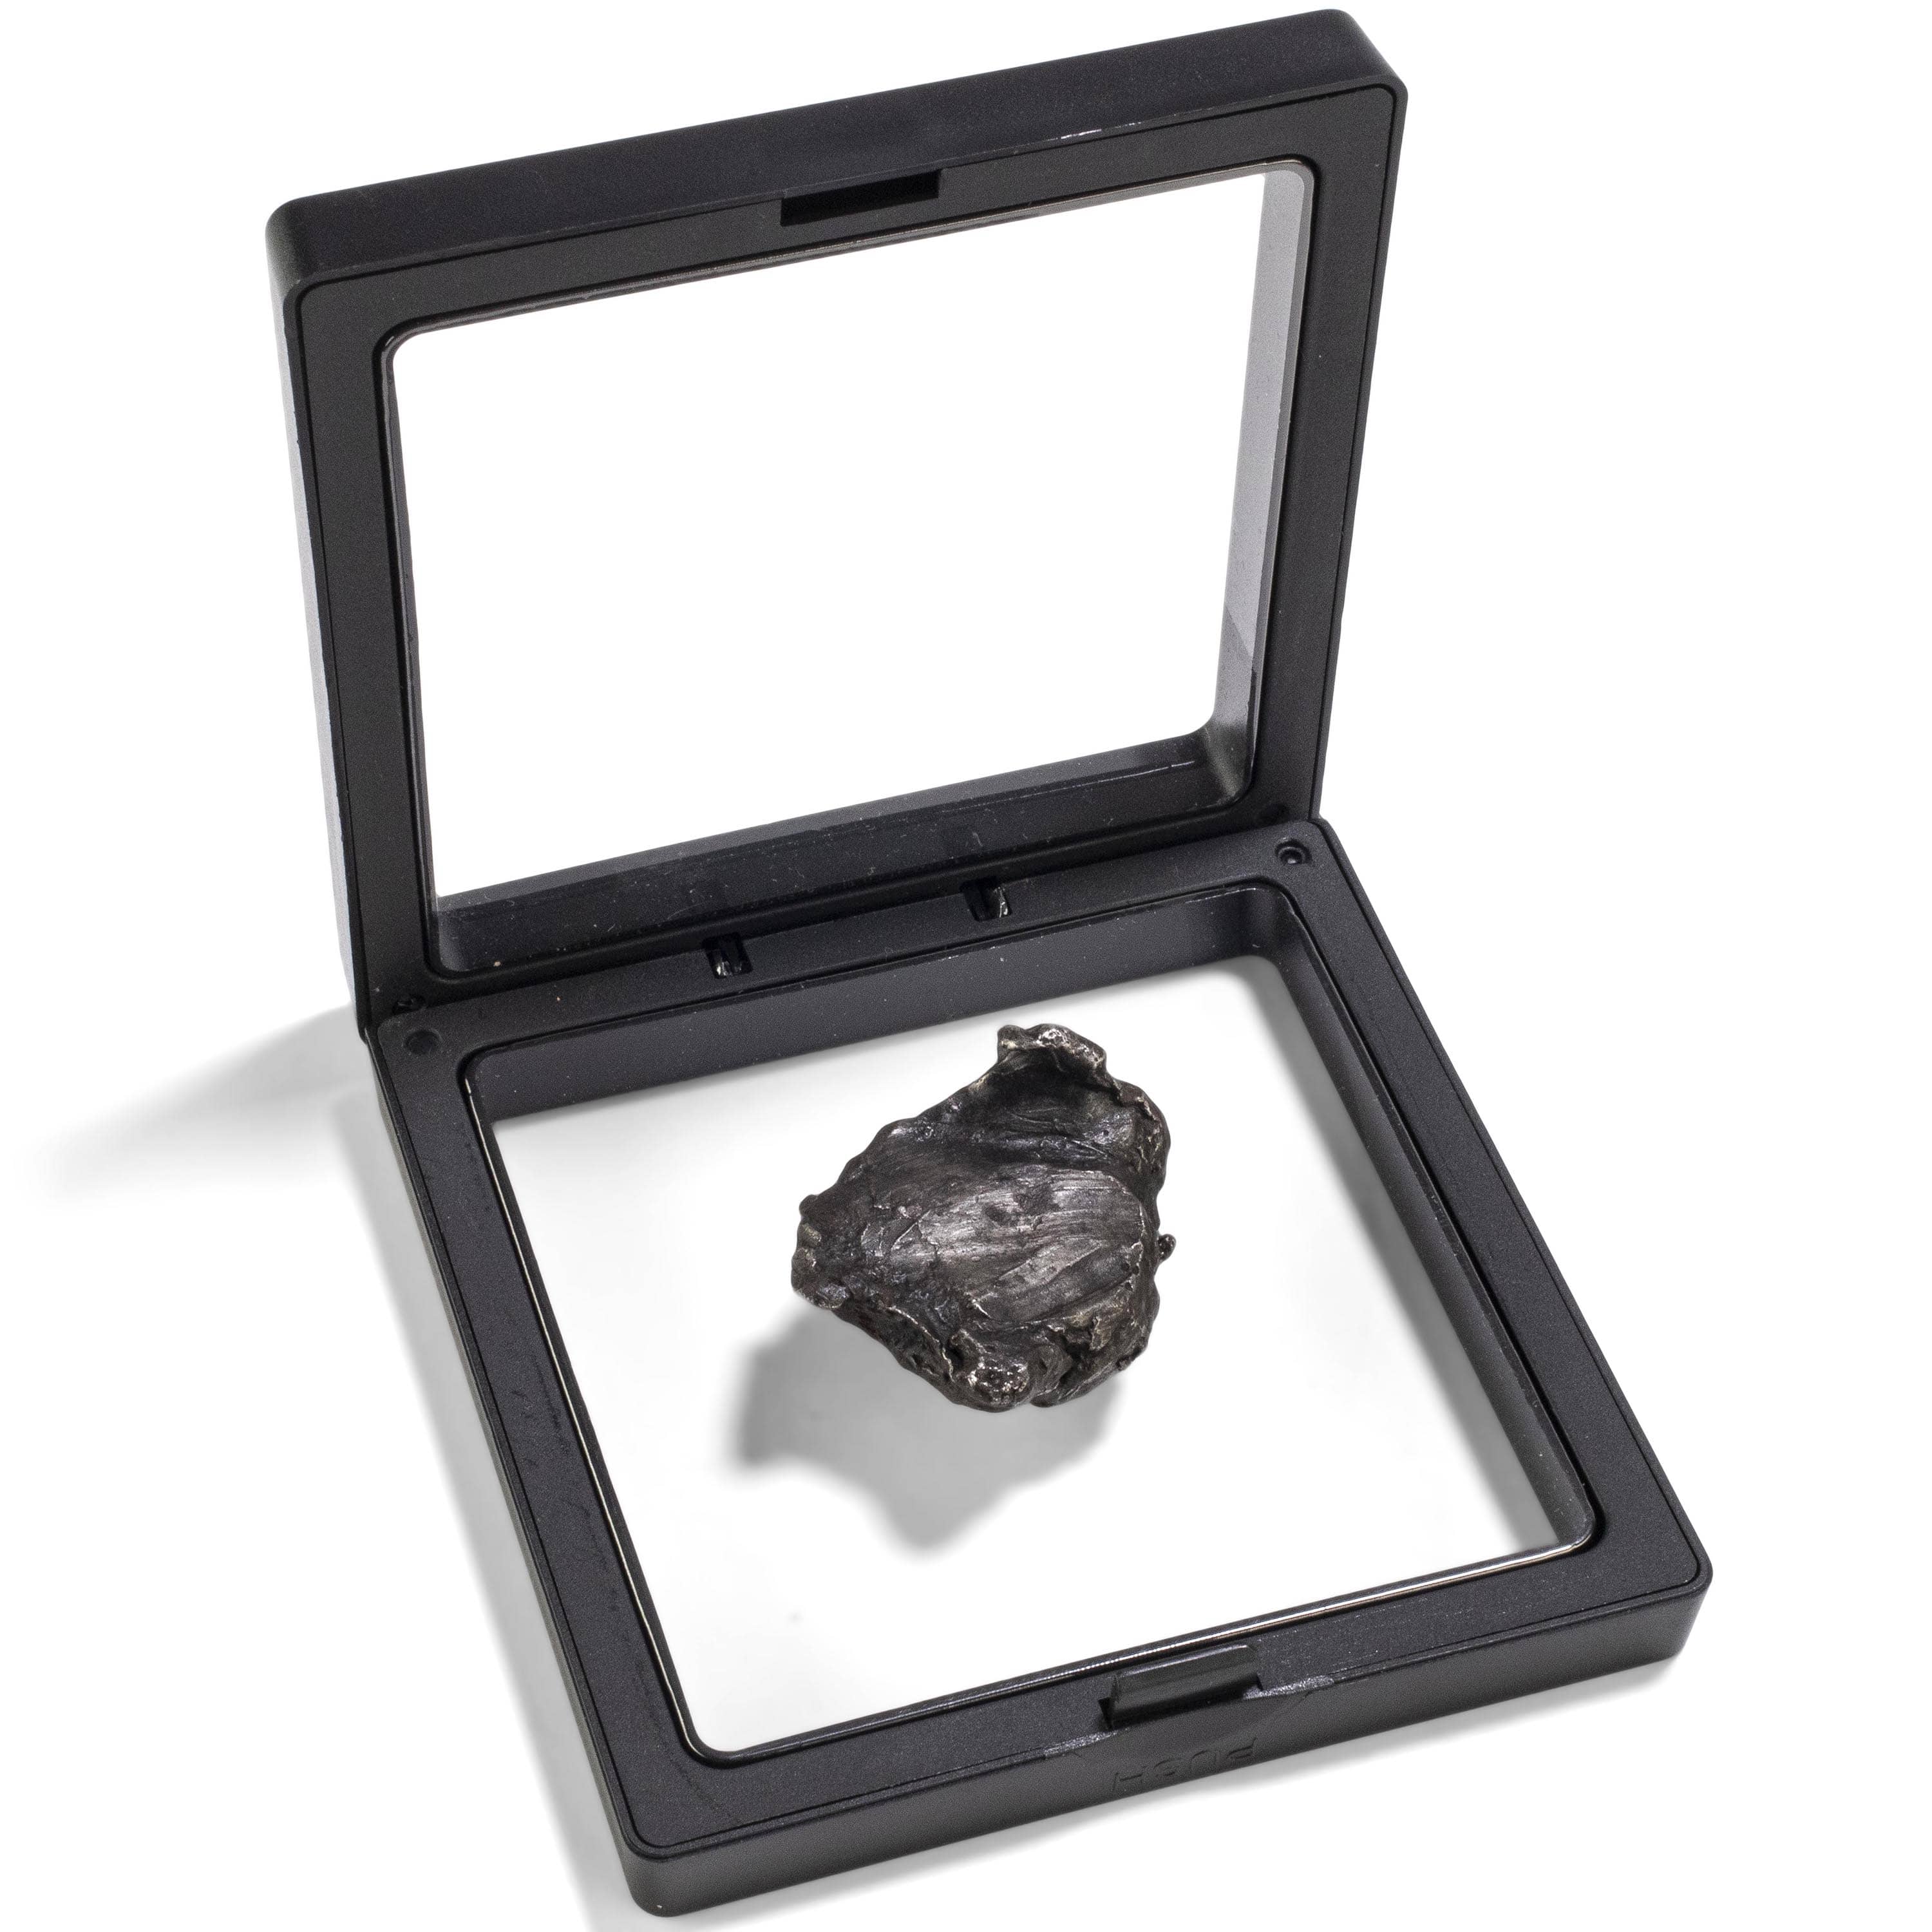 Kalifano Meteorites Natural Sikhote-Alin Meteorite from Russia - 38 grams MTS800